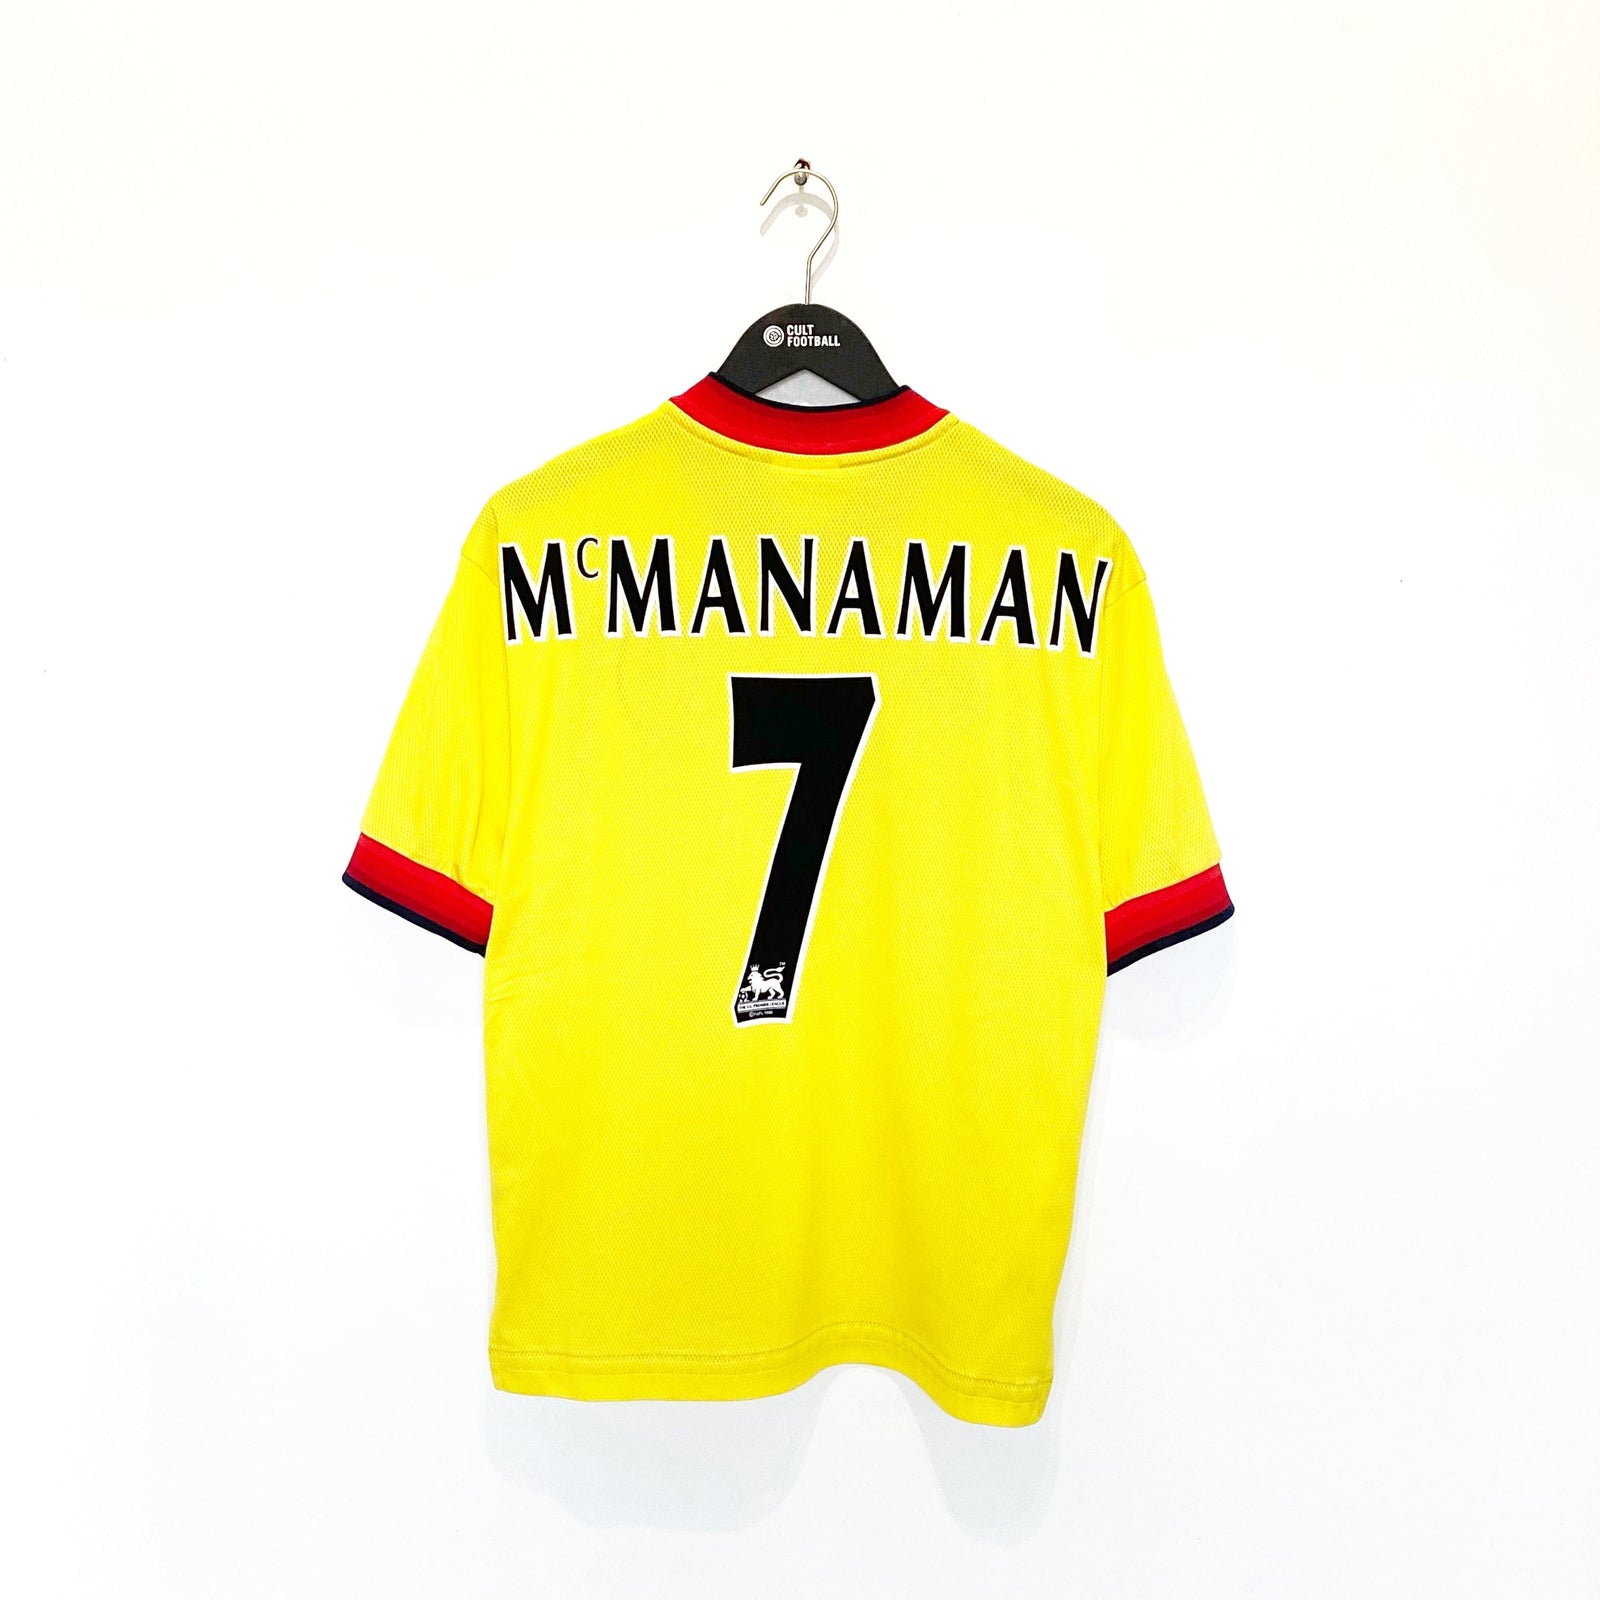 1997/99 McMANAMAN #7 Liverpool Vintage Reebok Away Football Shirt Jersey (S)